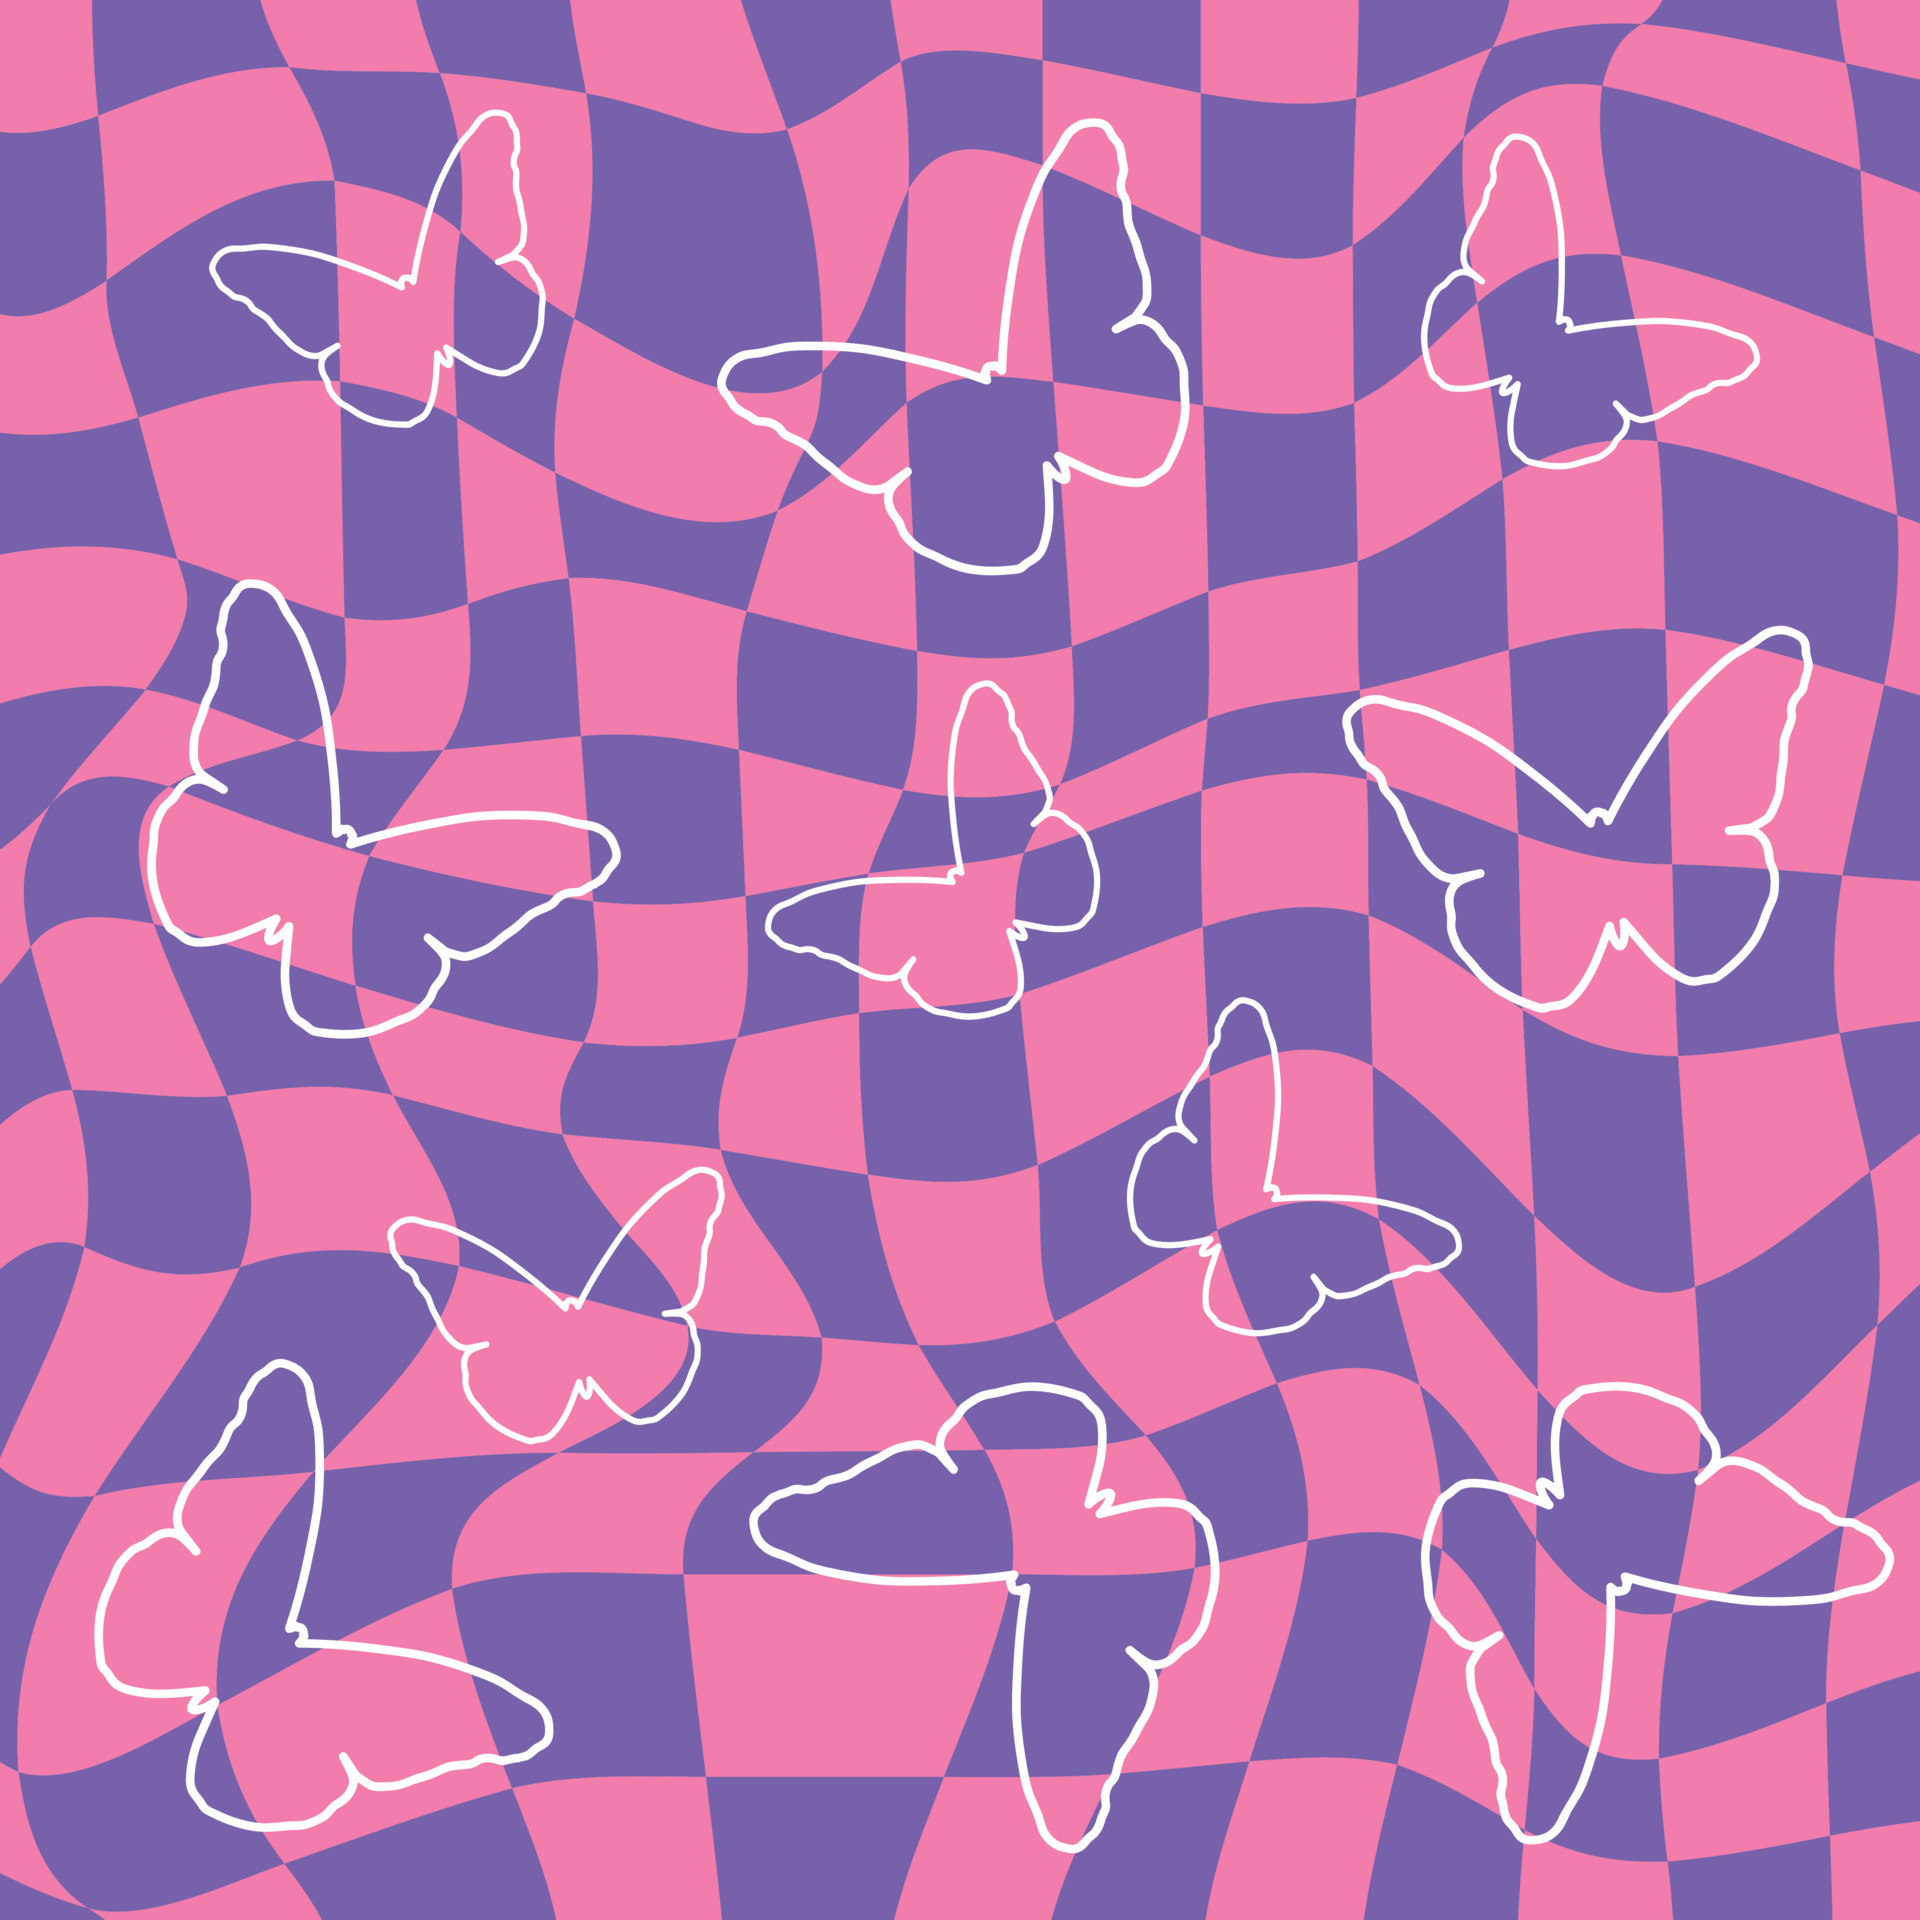 Pink grunge wallpaper by Lbvesick  Download on ZEDGE  4ef8